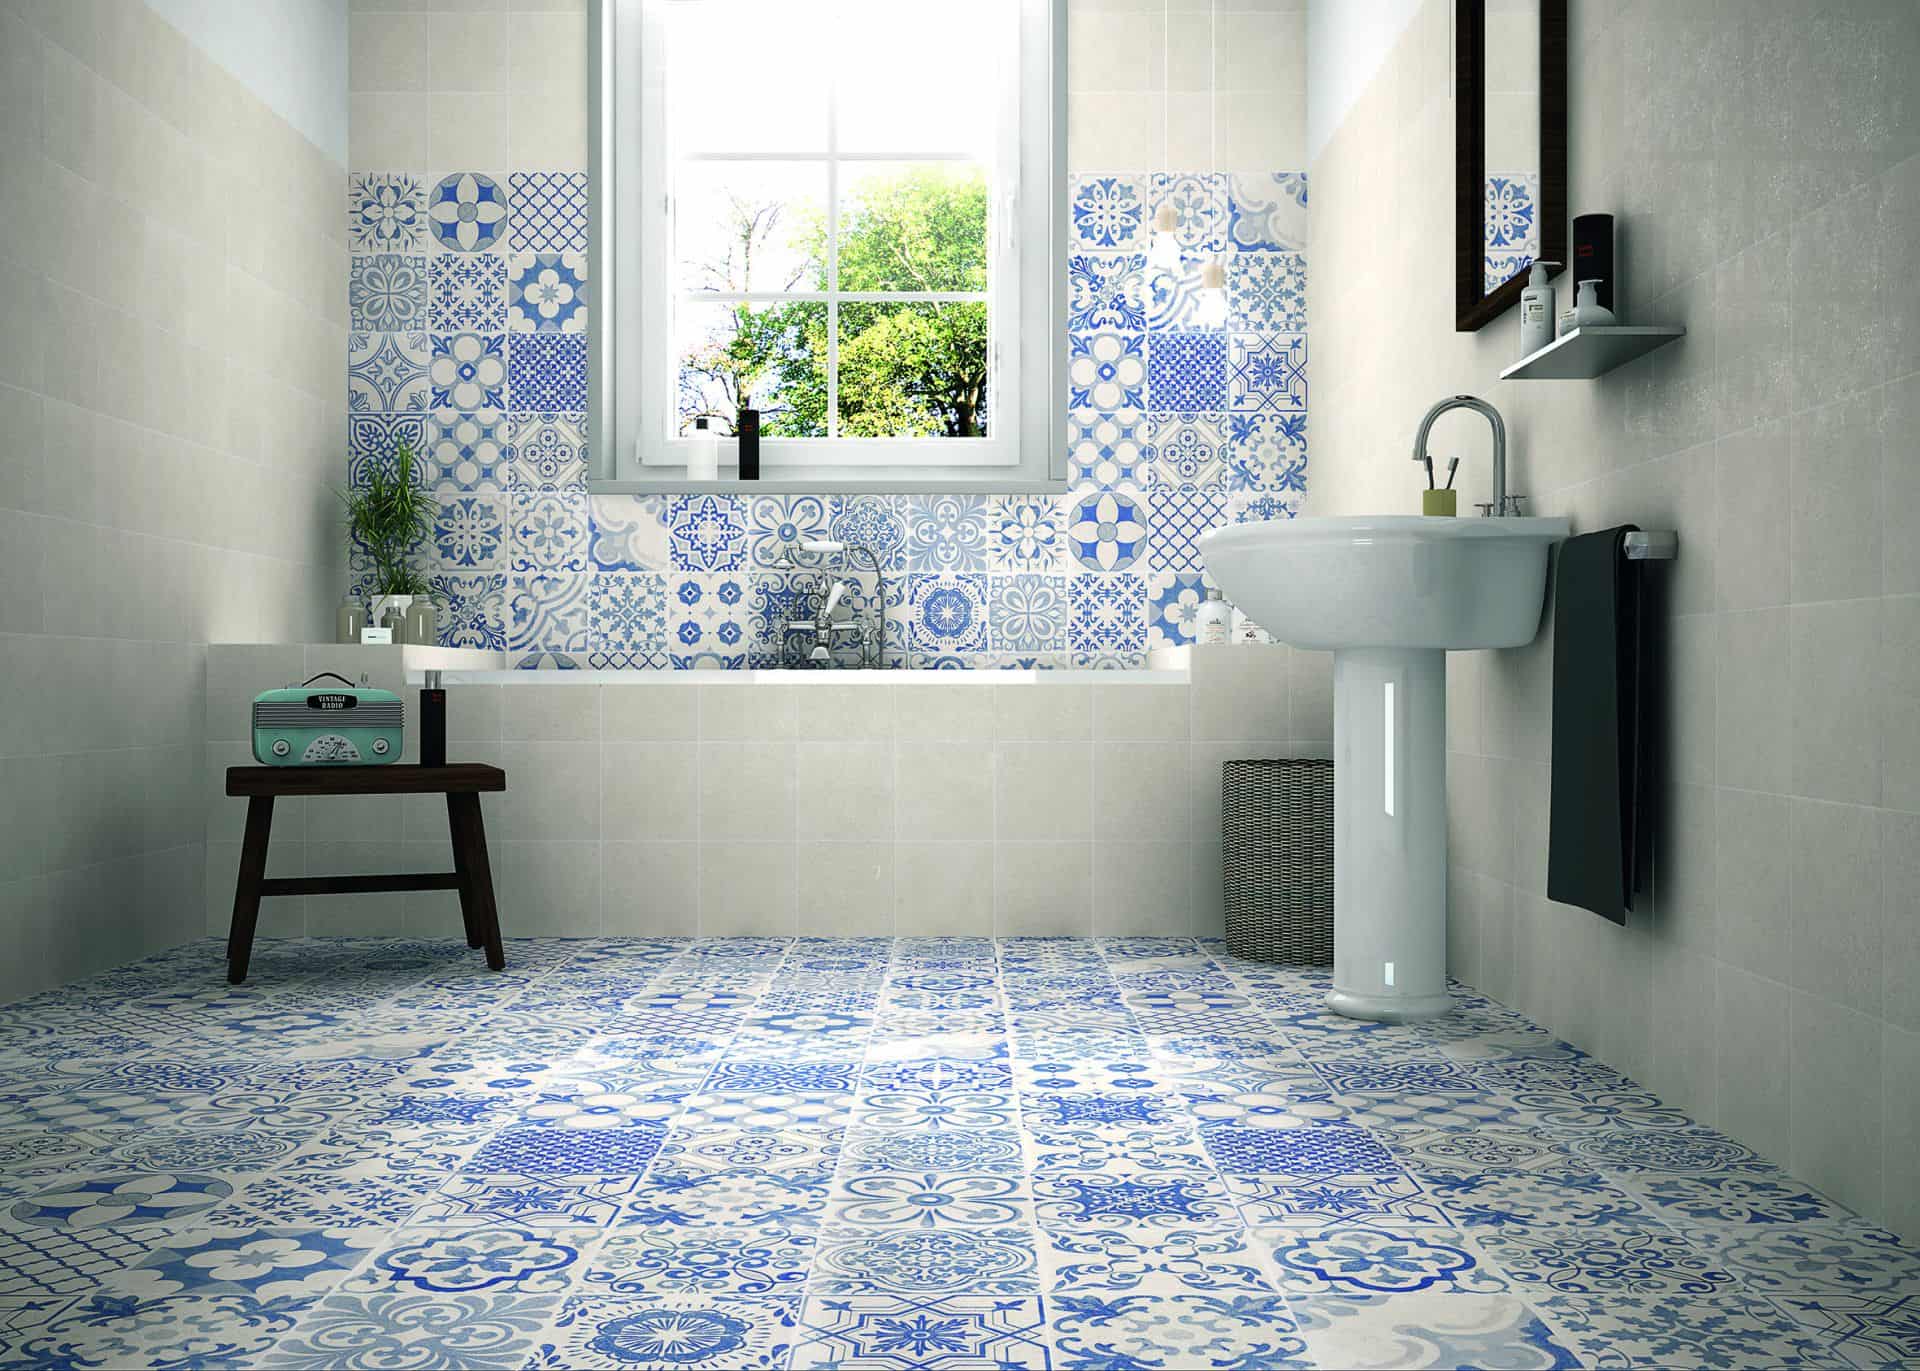 Bathroom Tiles in different blue prints 